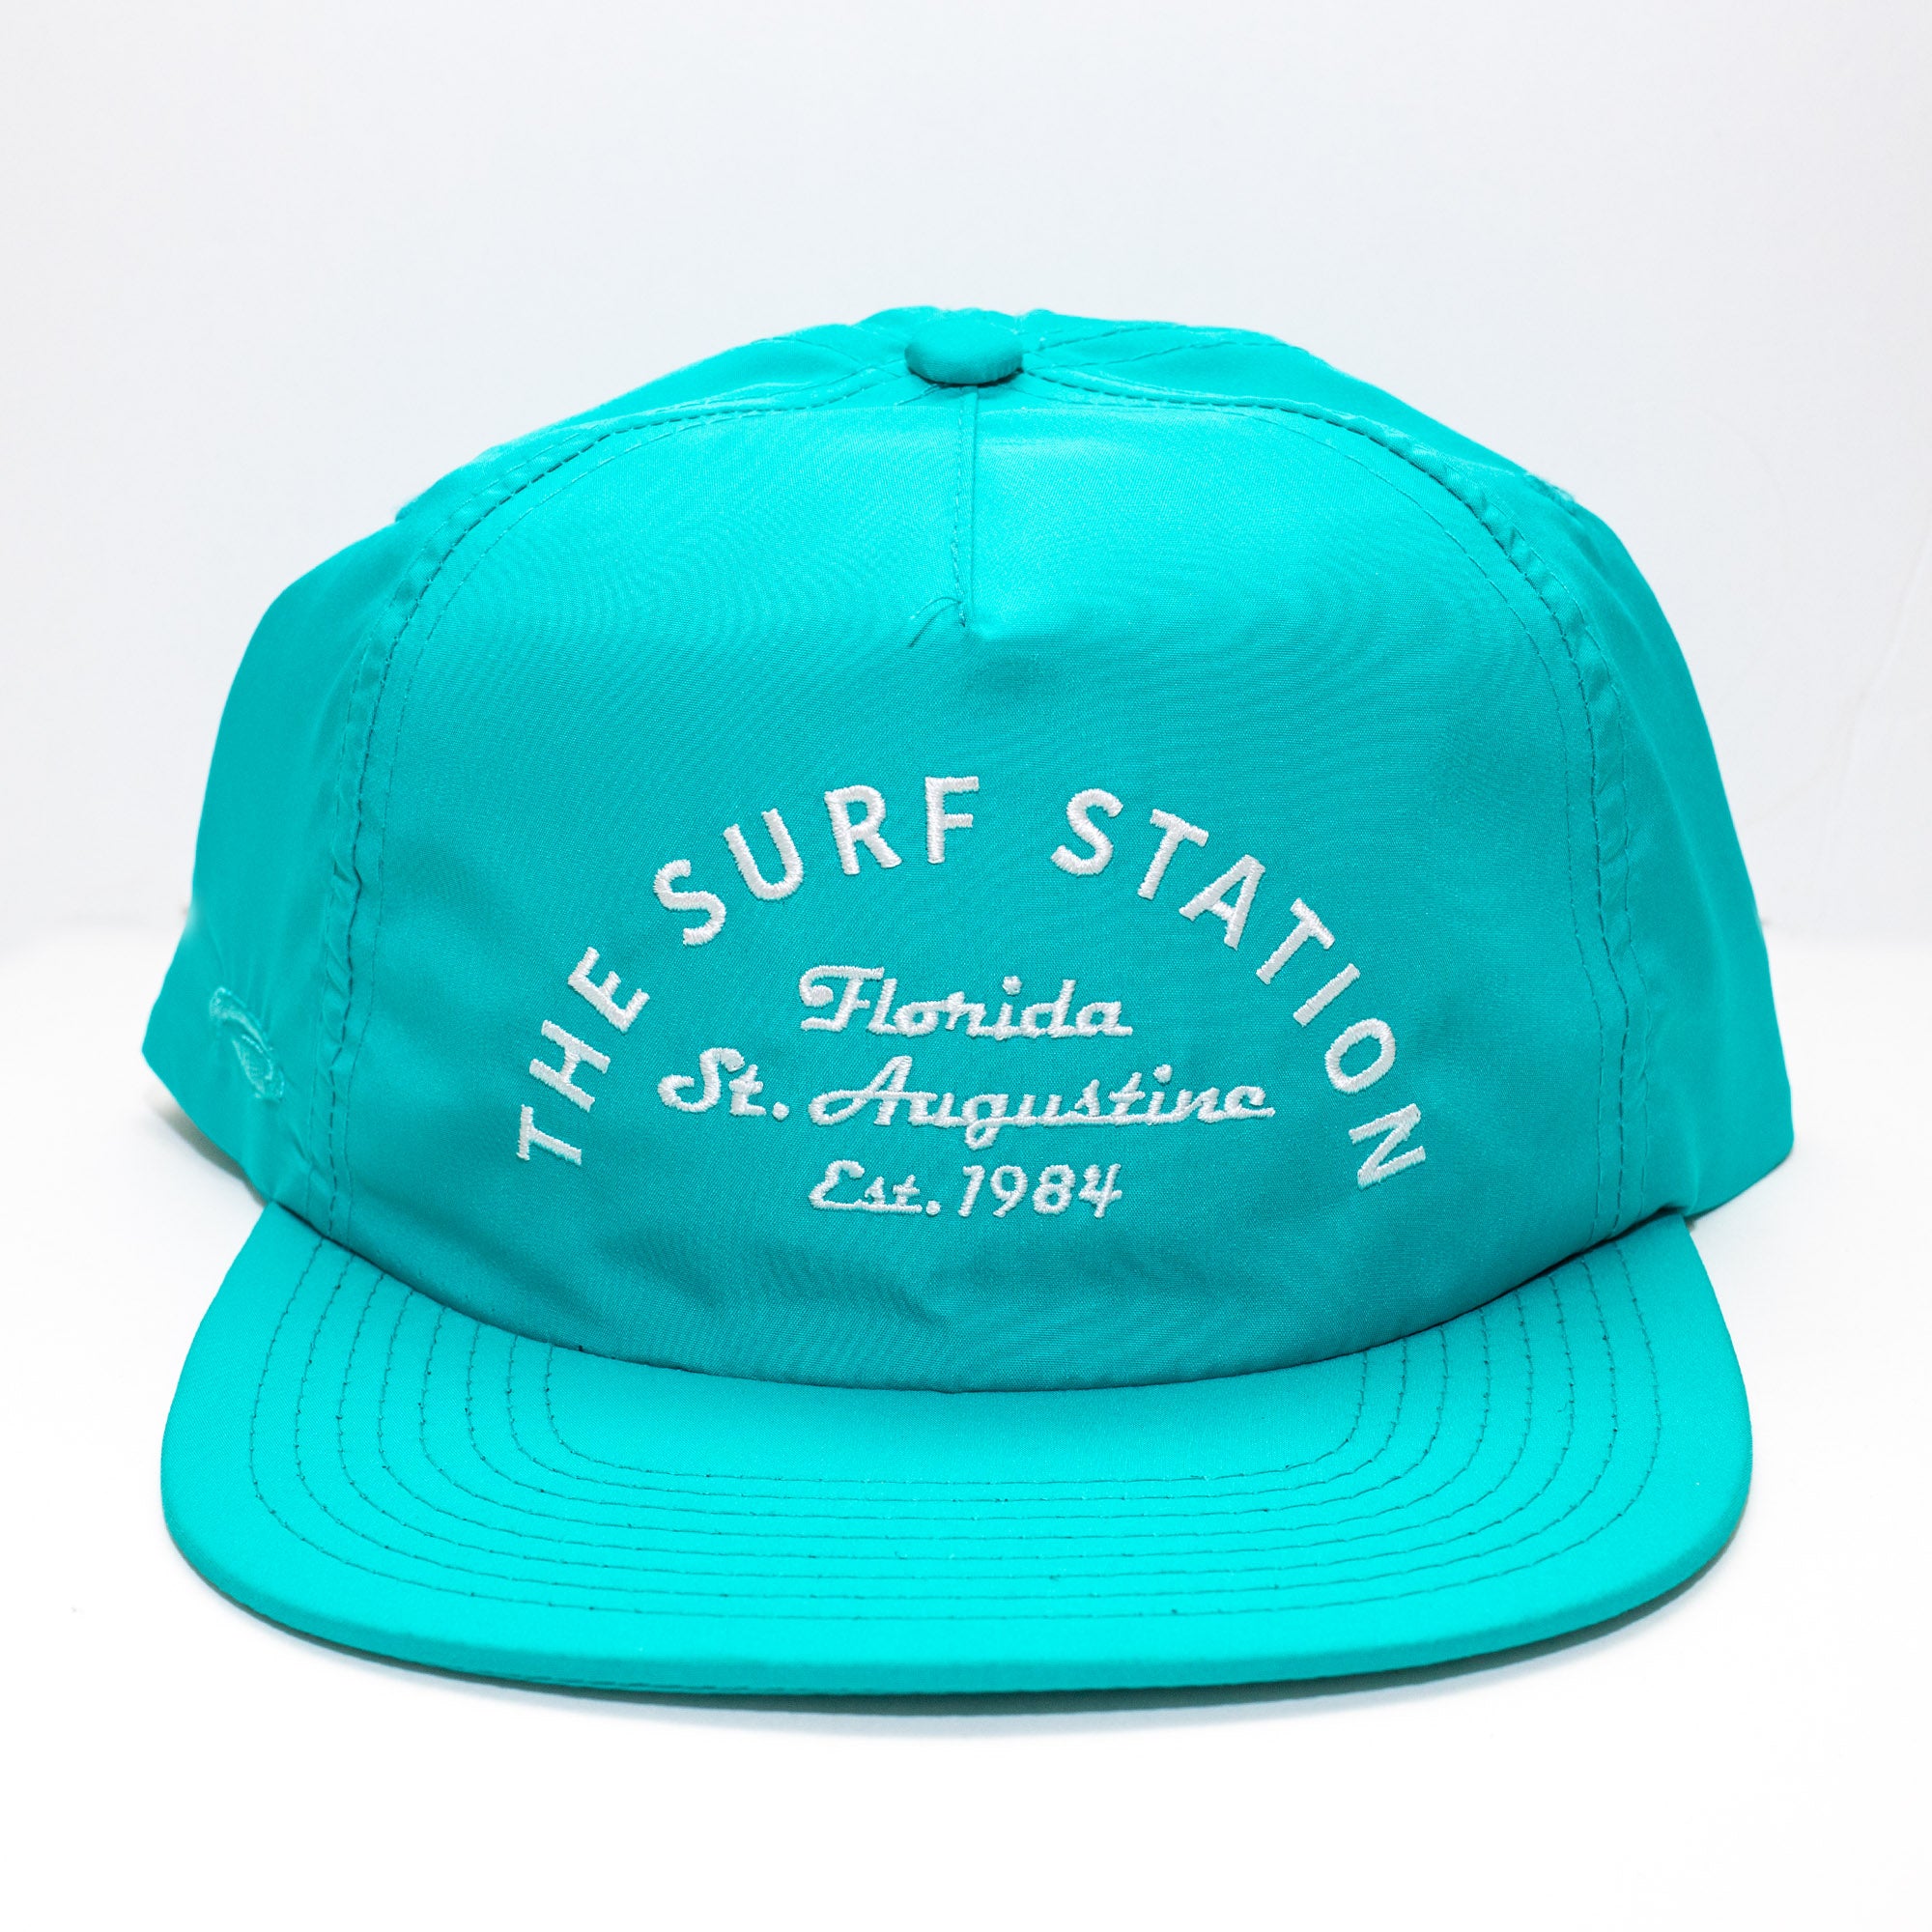 Surf Station Captain Men's Tech Snapback Hat